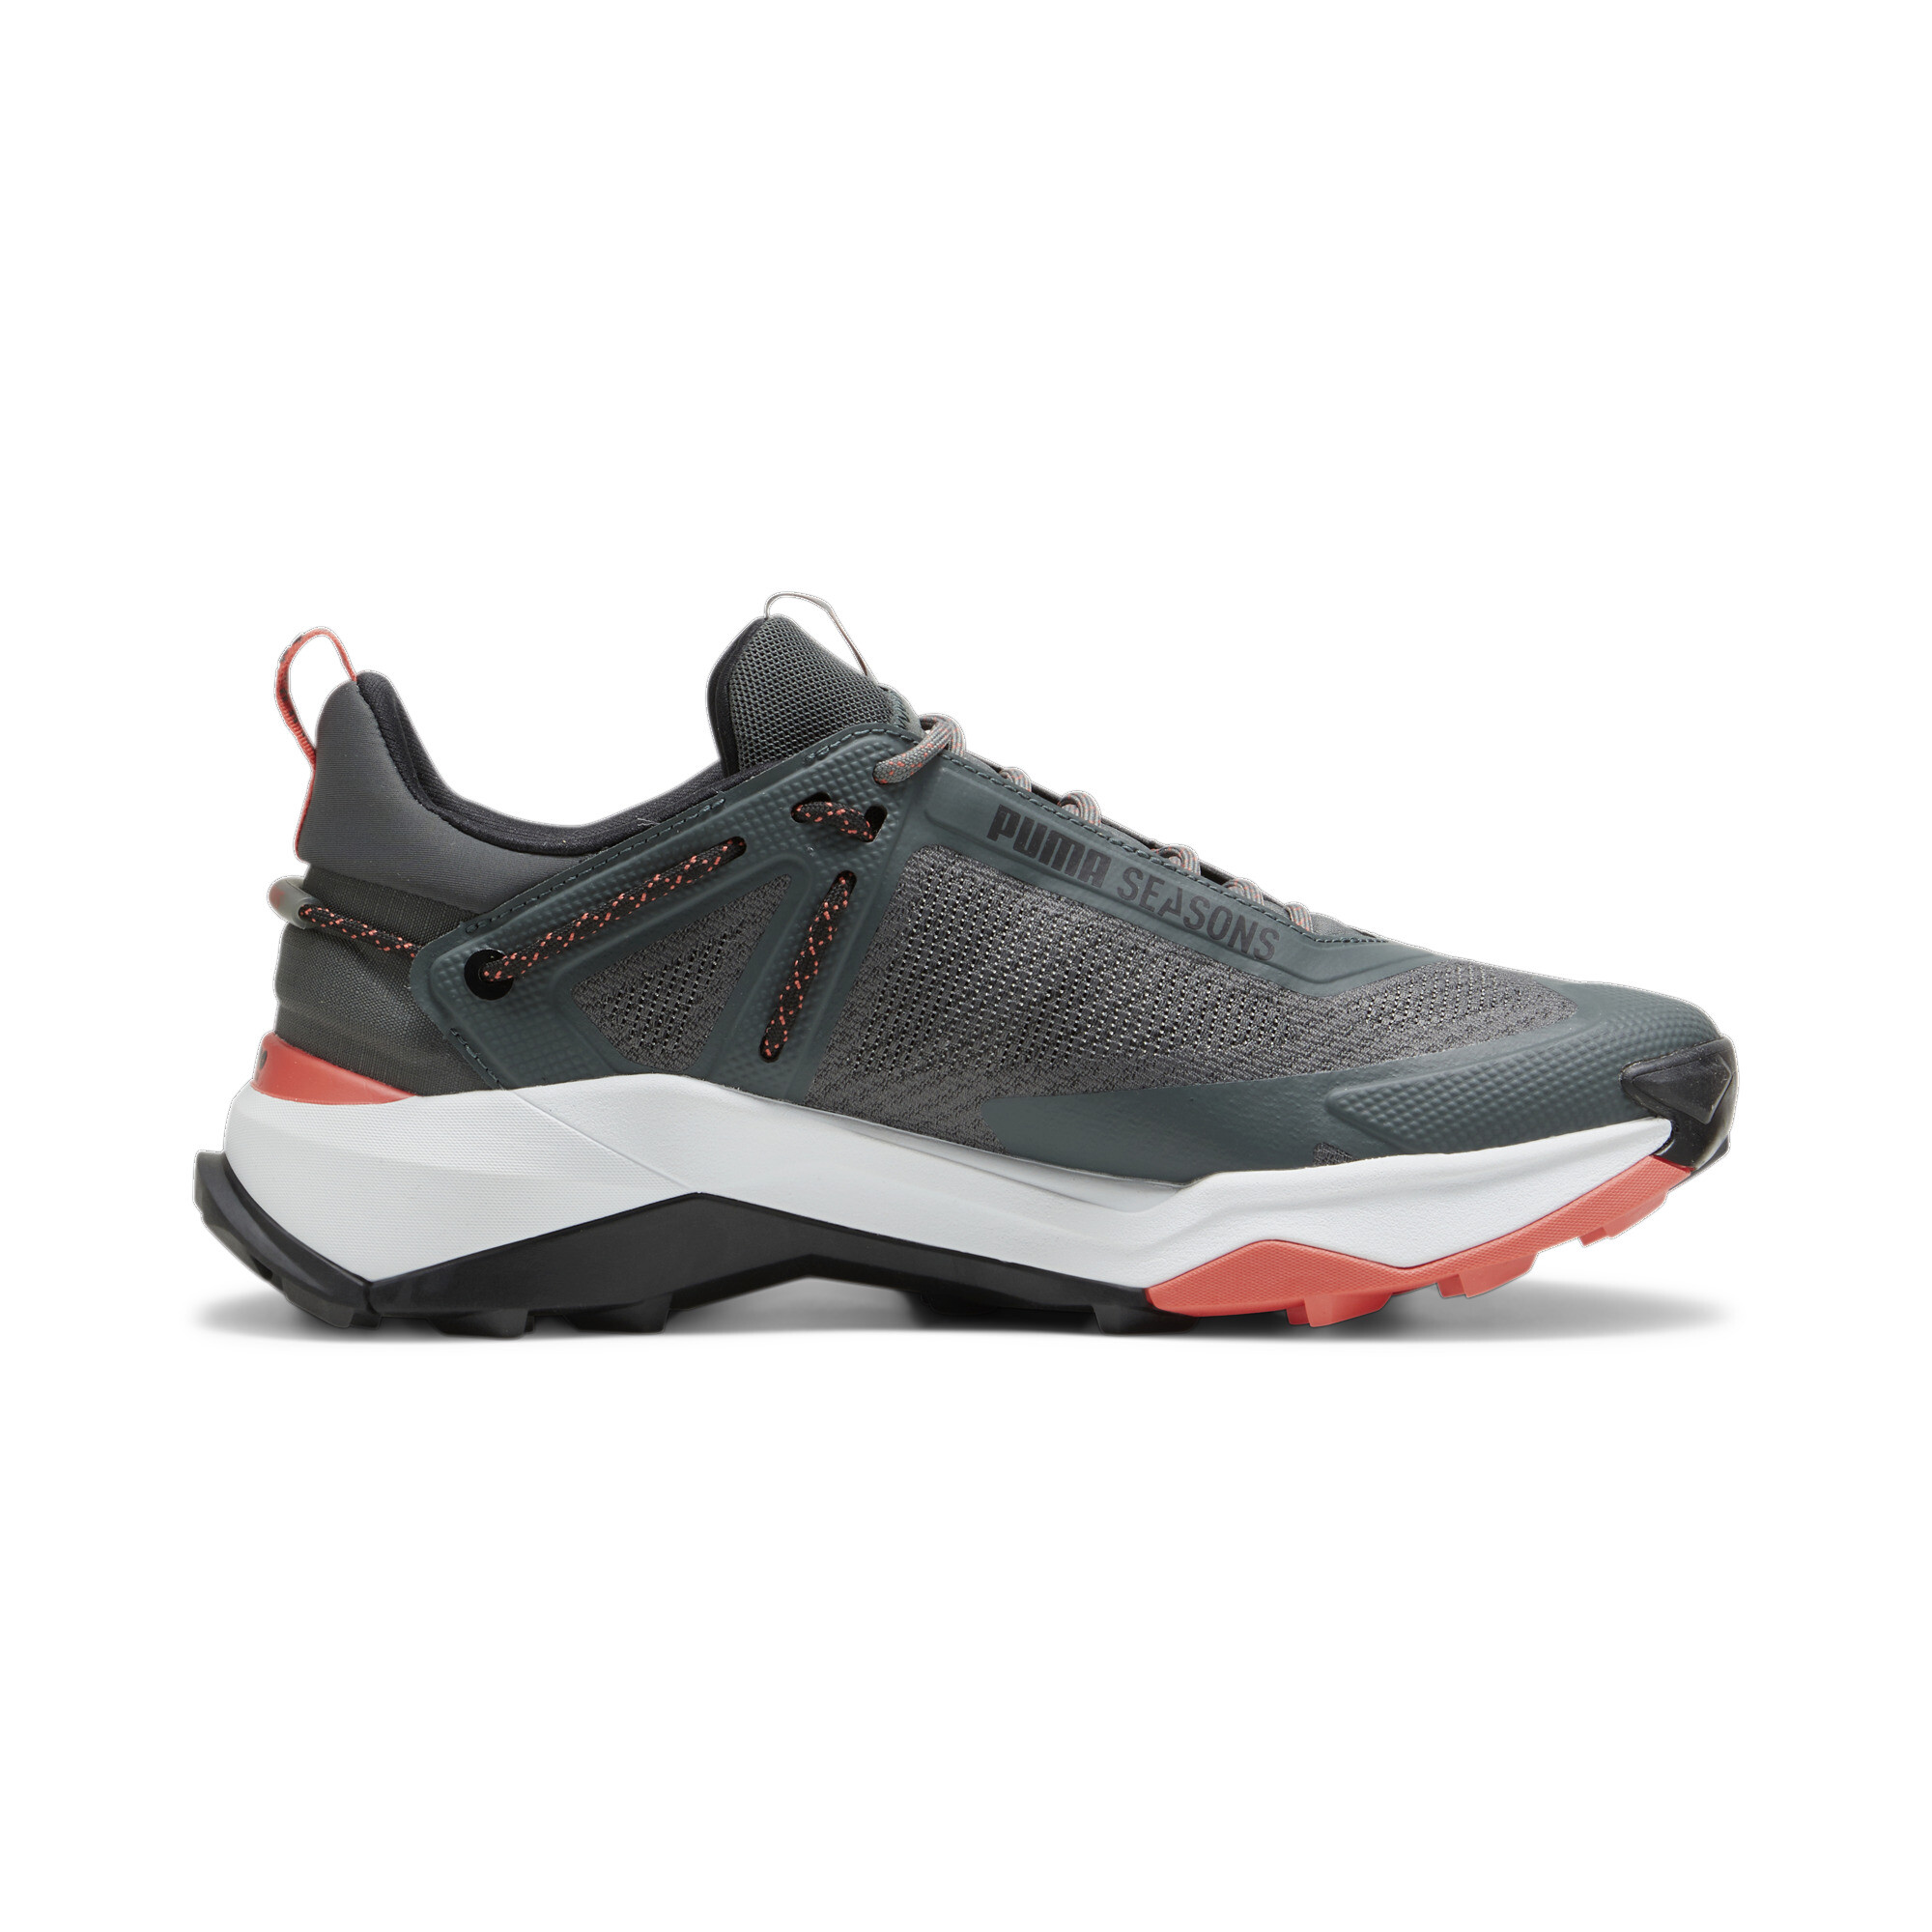 Men's PUMA Explore NITROâ¢ Hiking Shoes In Gray, Size EU 41